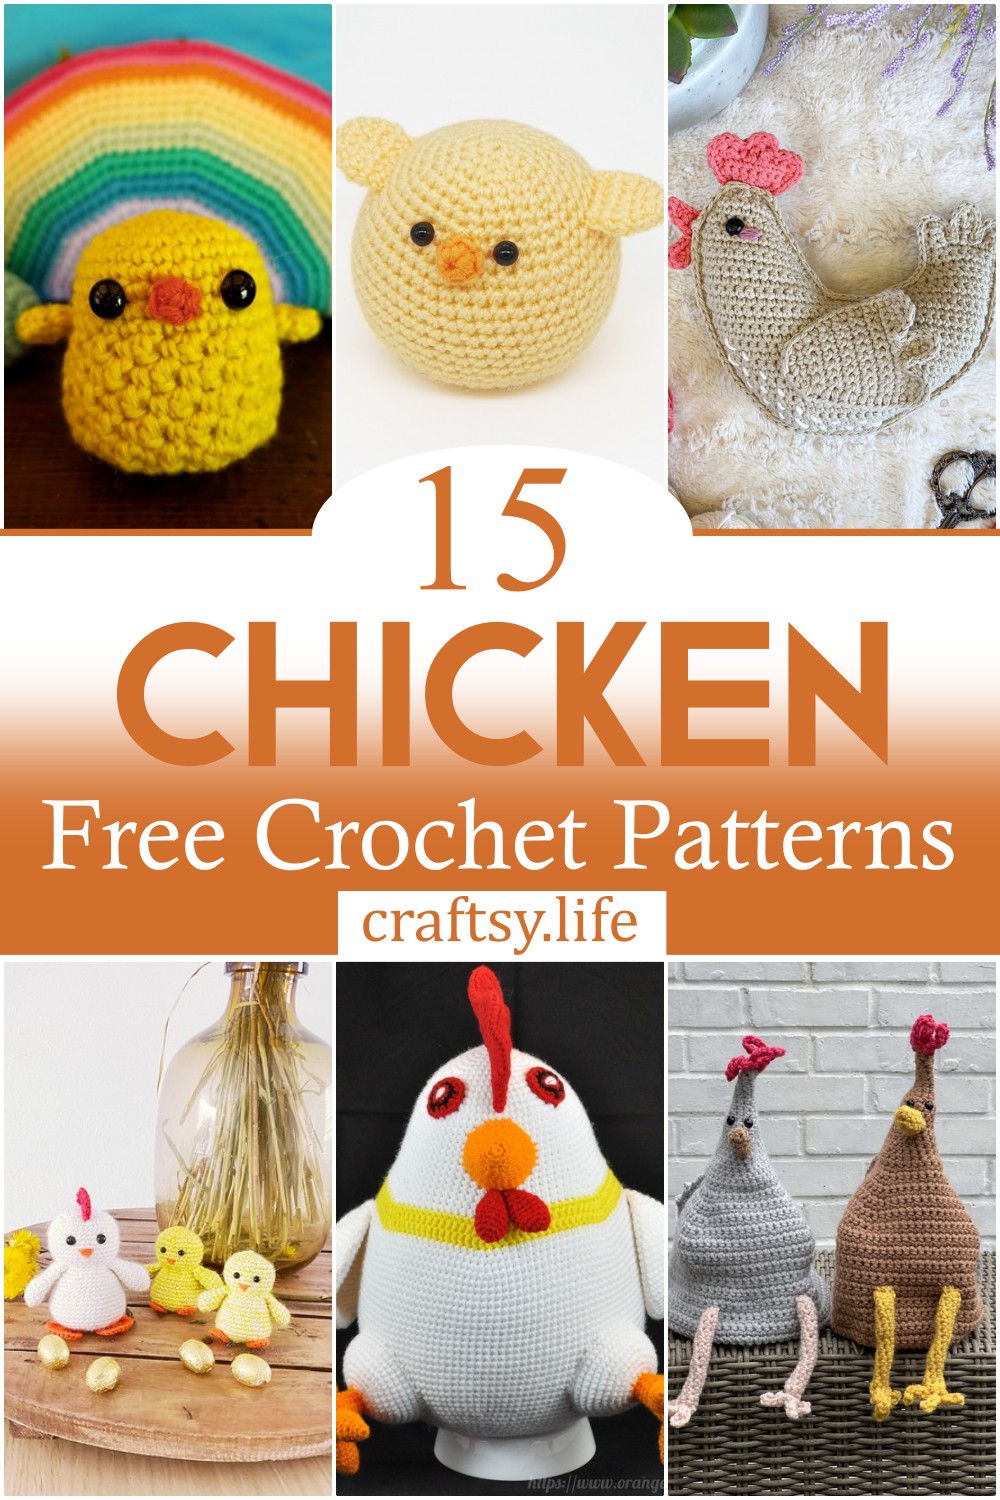 Free Crochet Chicken Patterns